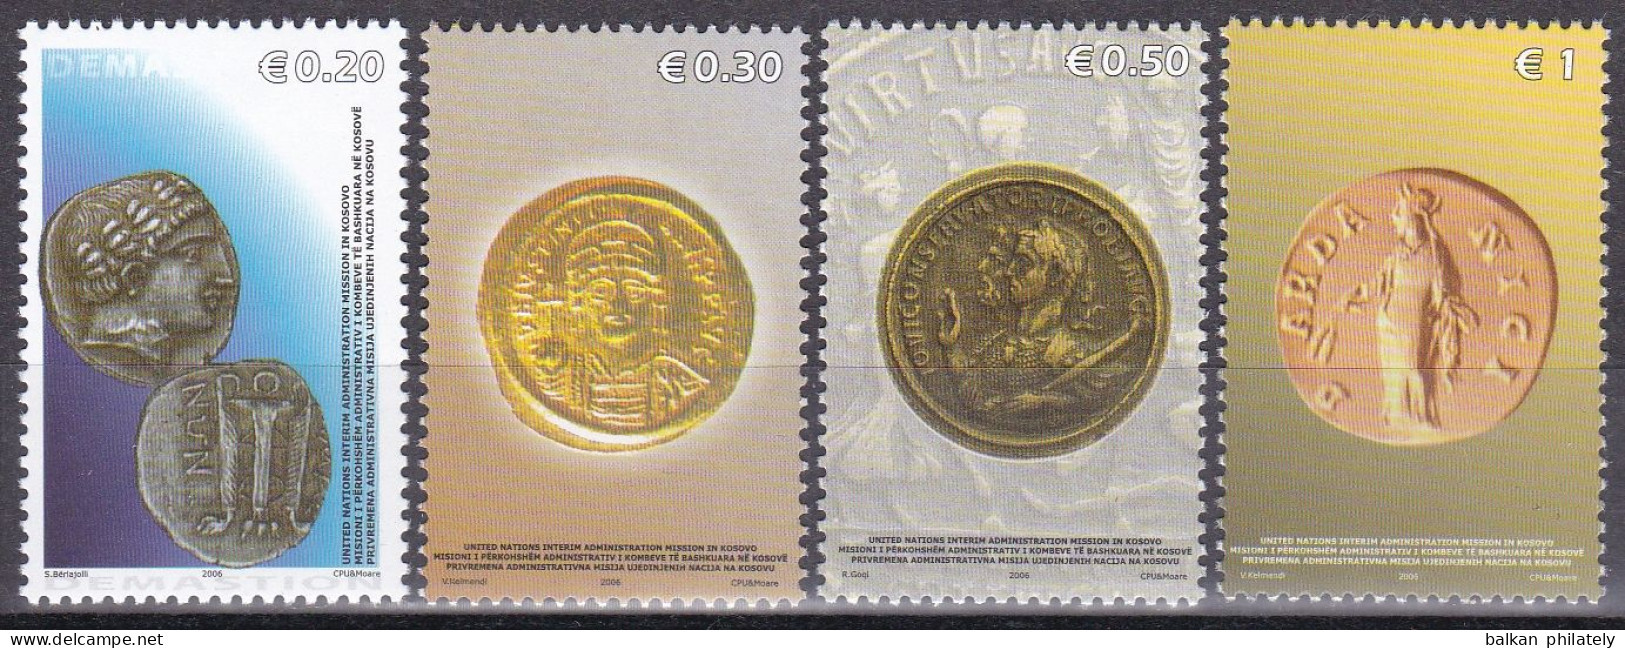 Kosovo 2006 Numismatics Roman Coins Damastion Justinian Probus Trajan UNMIK UN United Nations MNH - Nuevos